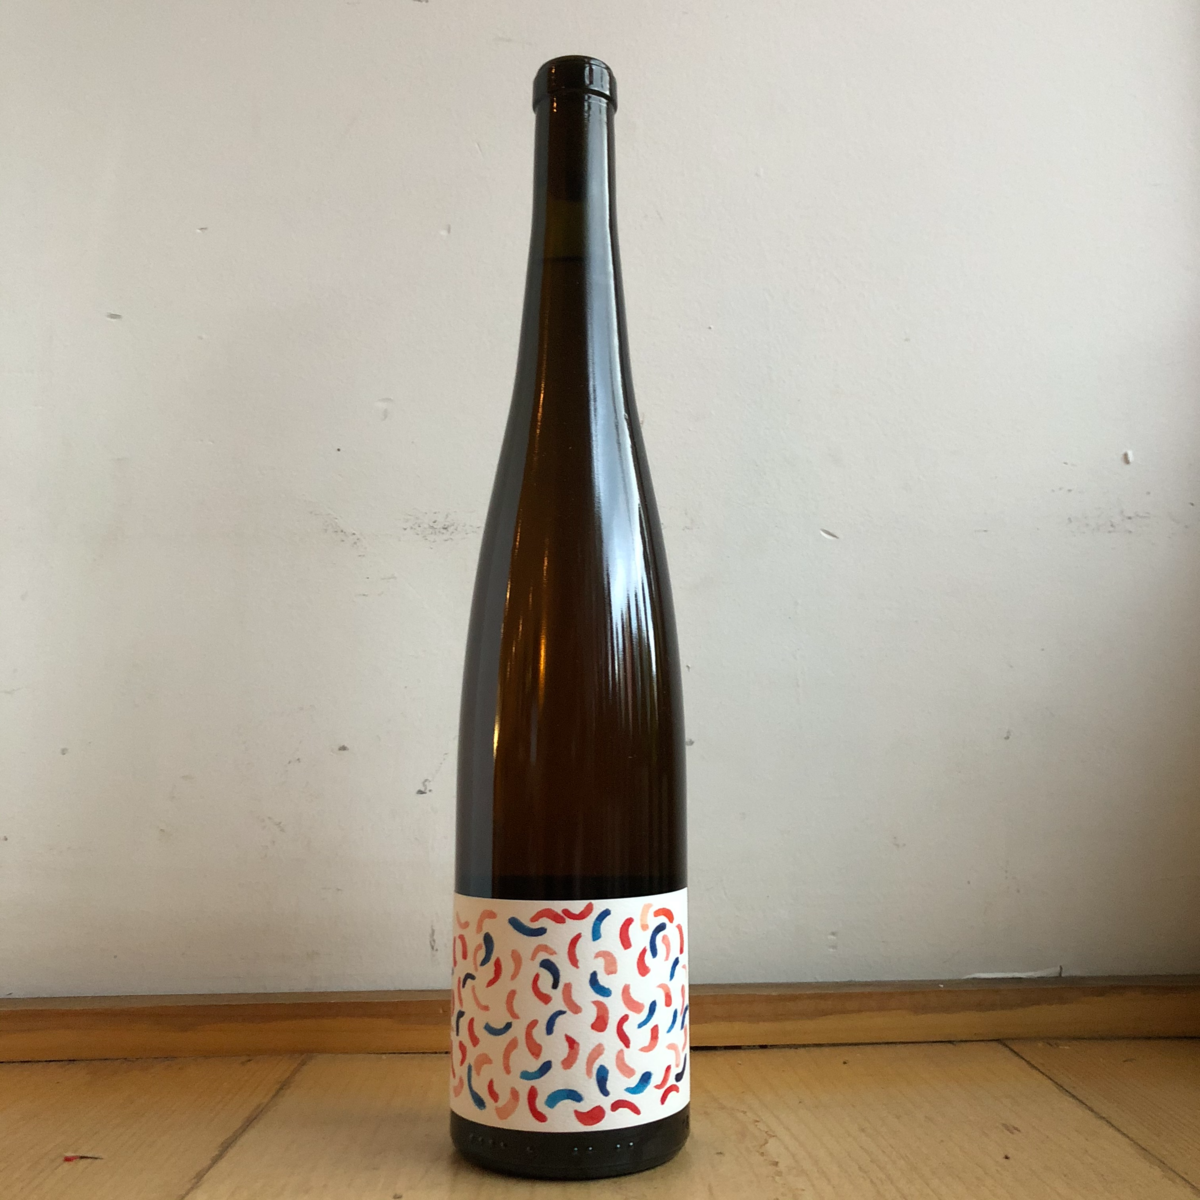 Floral Terranes Cider, "Ronkonkoma Moraine" 2019